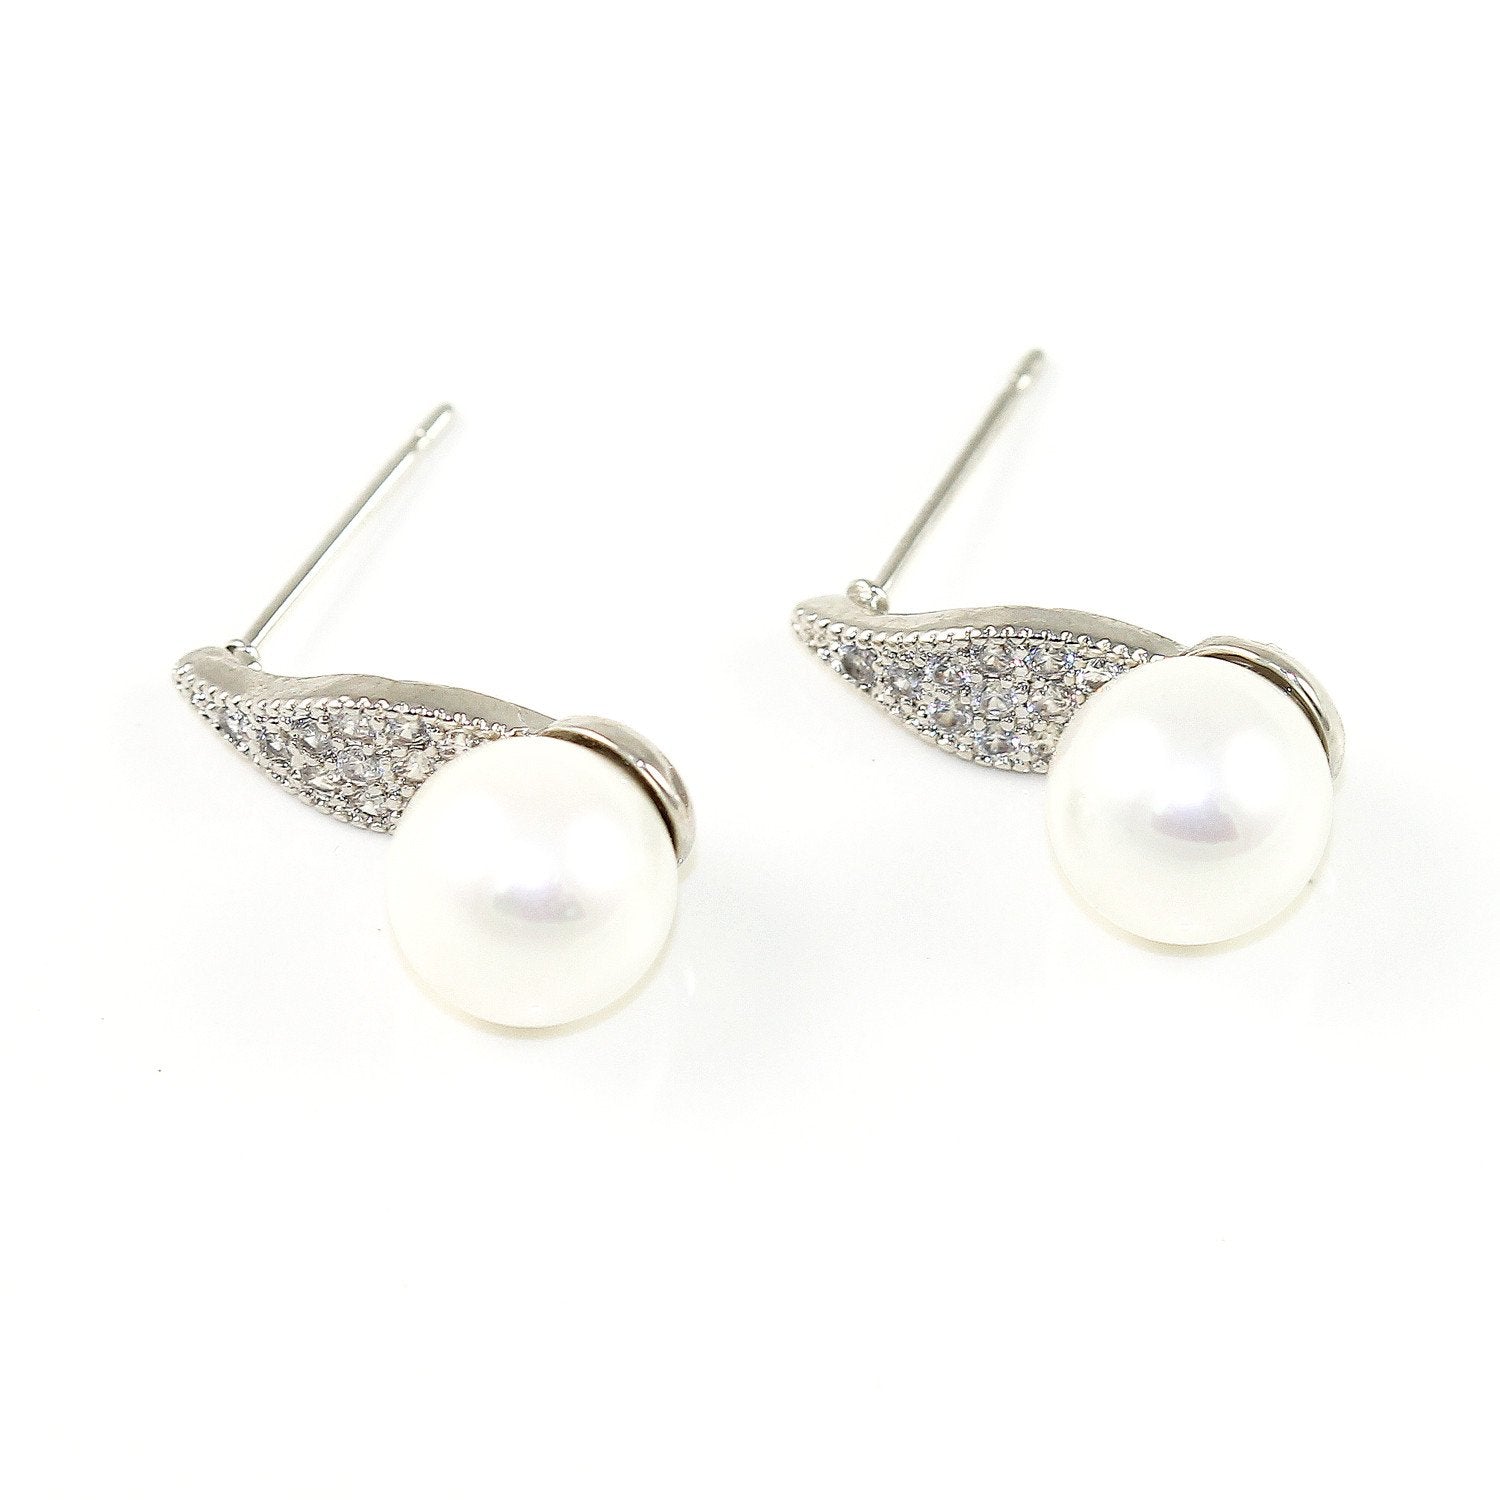 Sparkling CZ Crystal Petal Earrings with Pearl Stud - Hypoallergenic & Free Shipping Worldwide - Earrings - Bijou Her -  -  - 